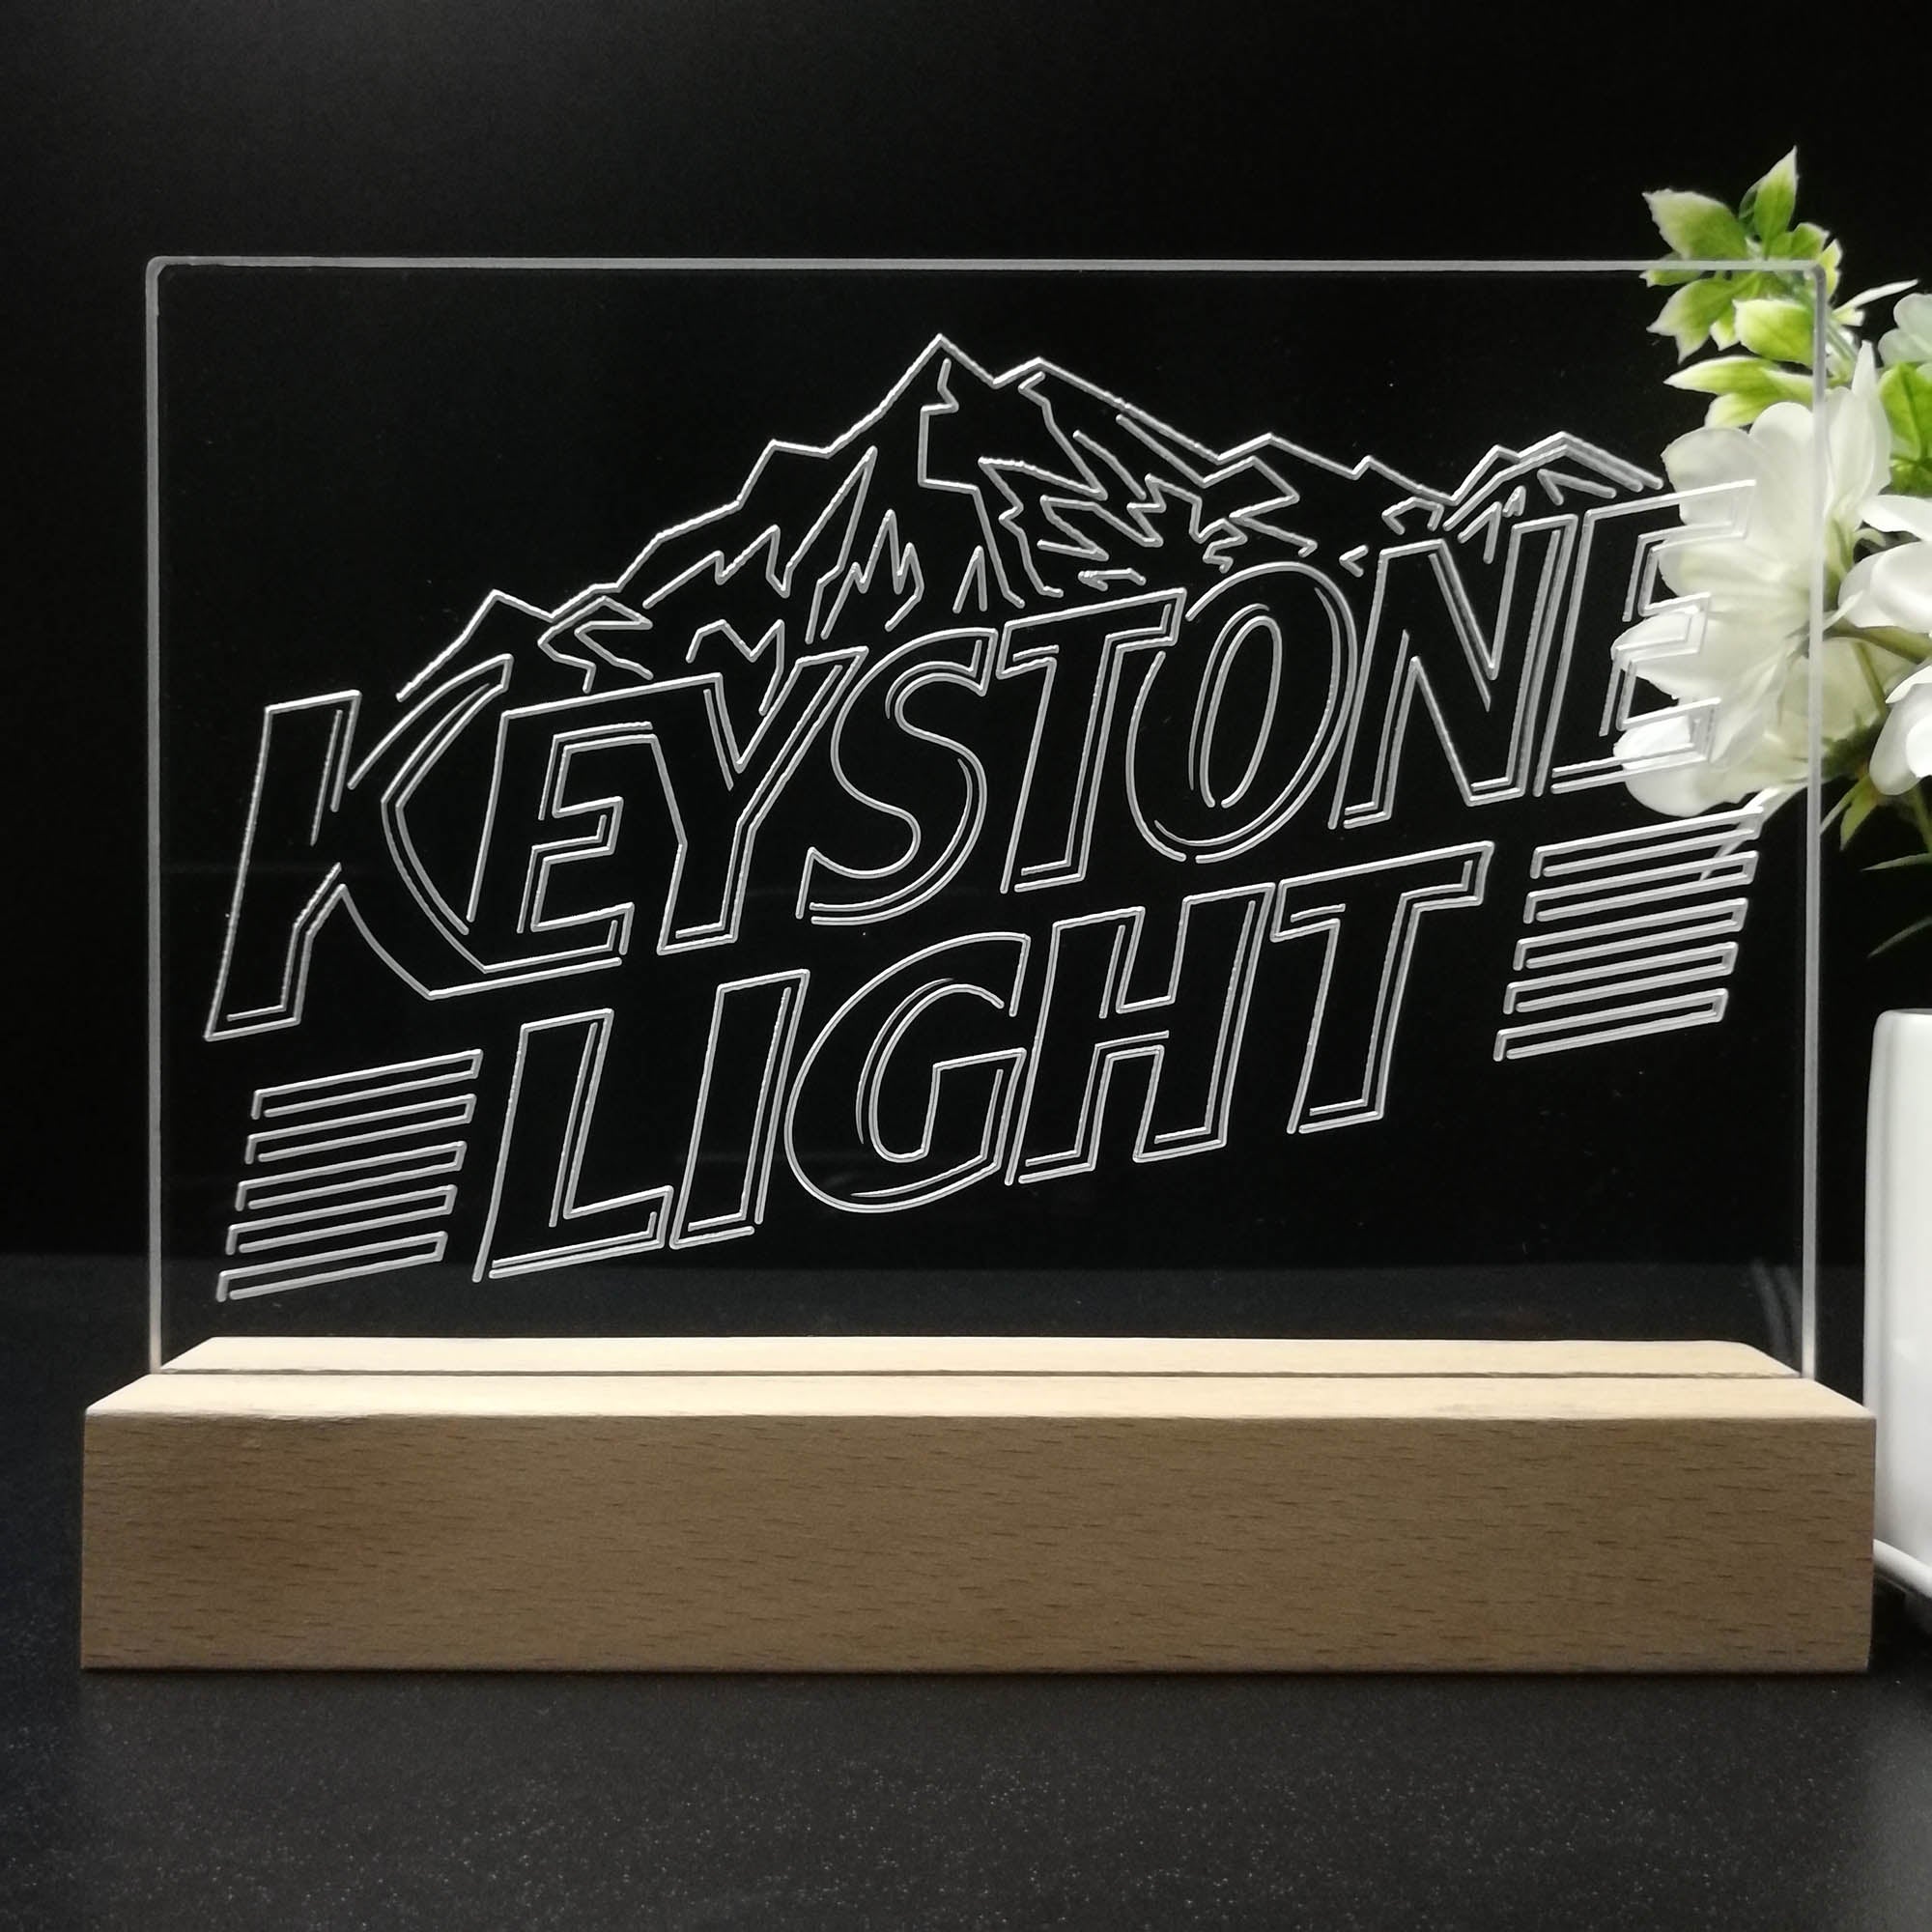 Keystone Light Neon Sign Pub Bar Decor Lamp